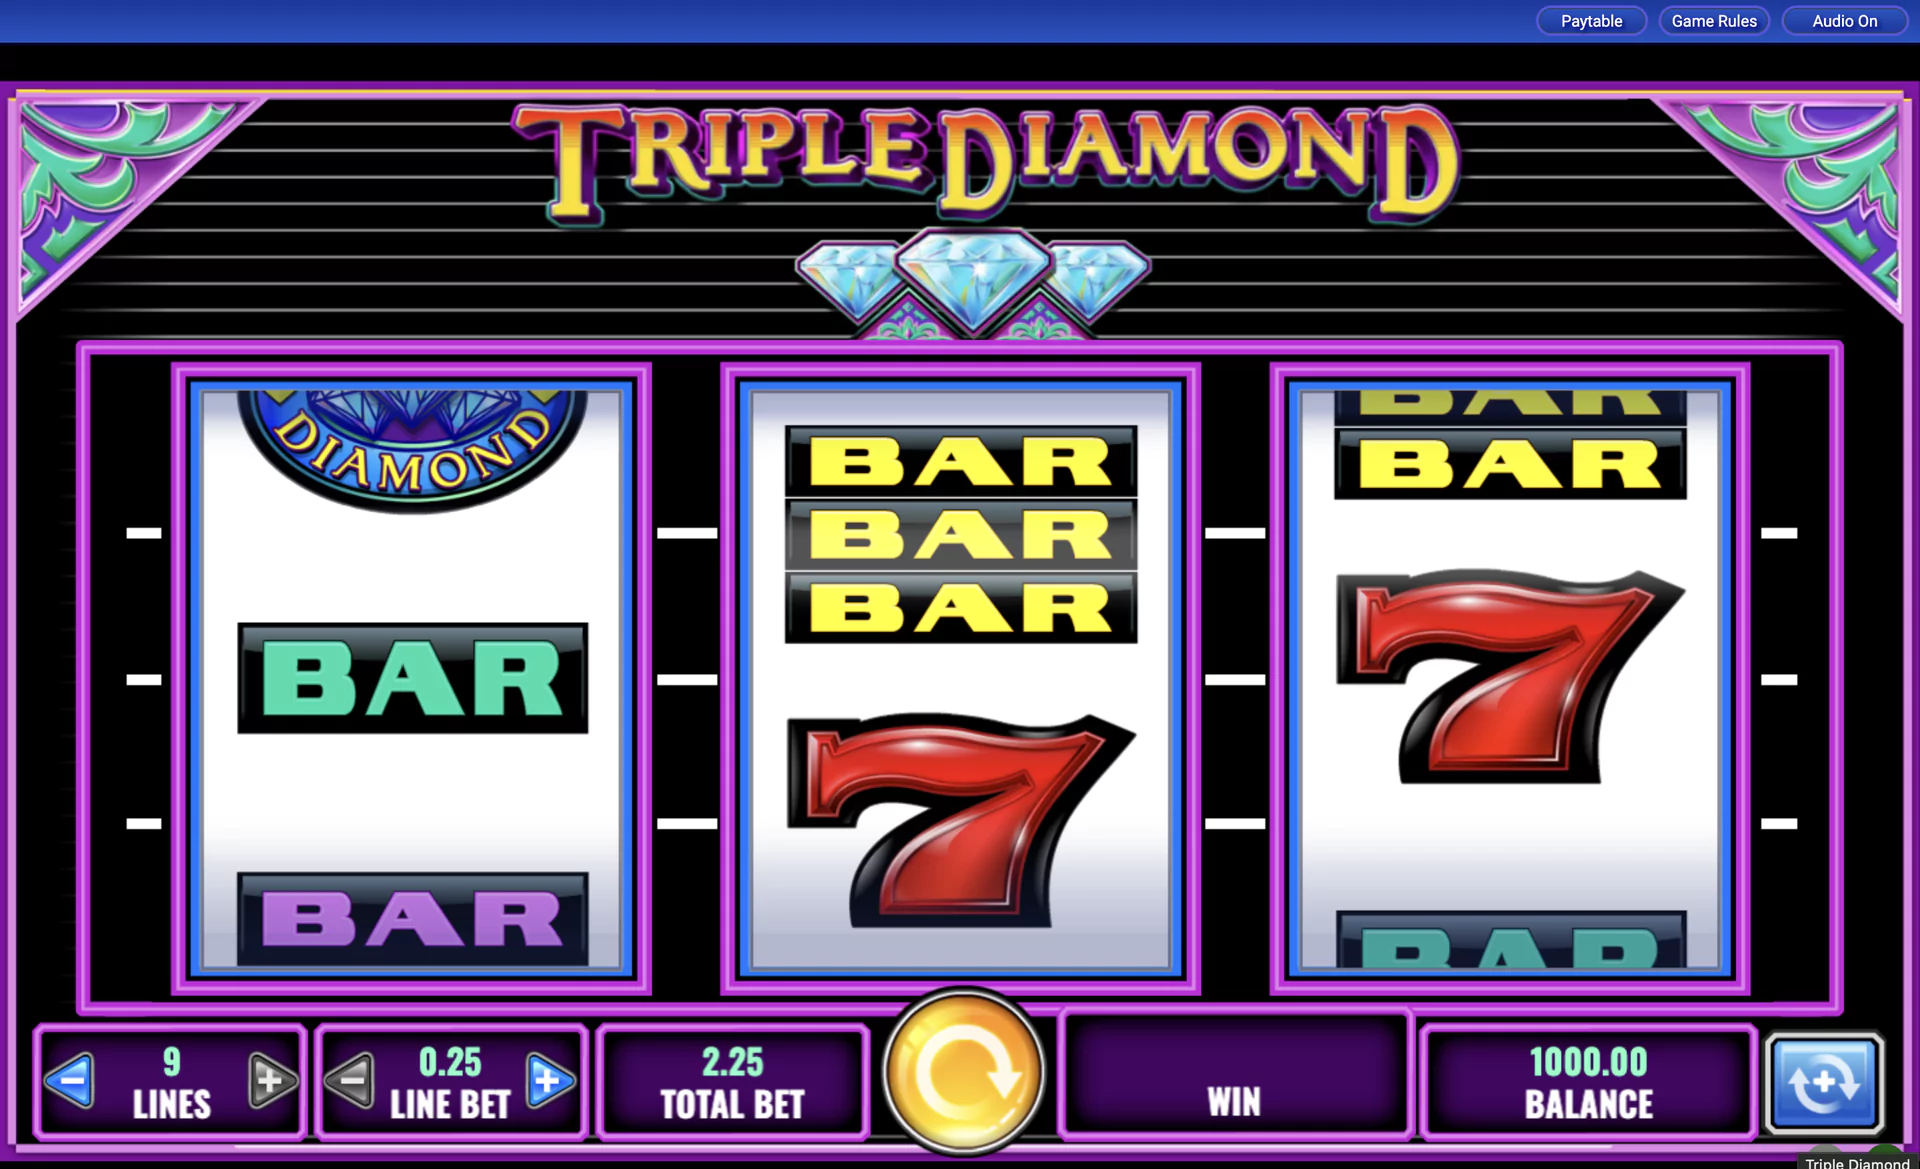 Screenshot of the Triple Double Diamond Slot